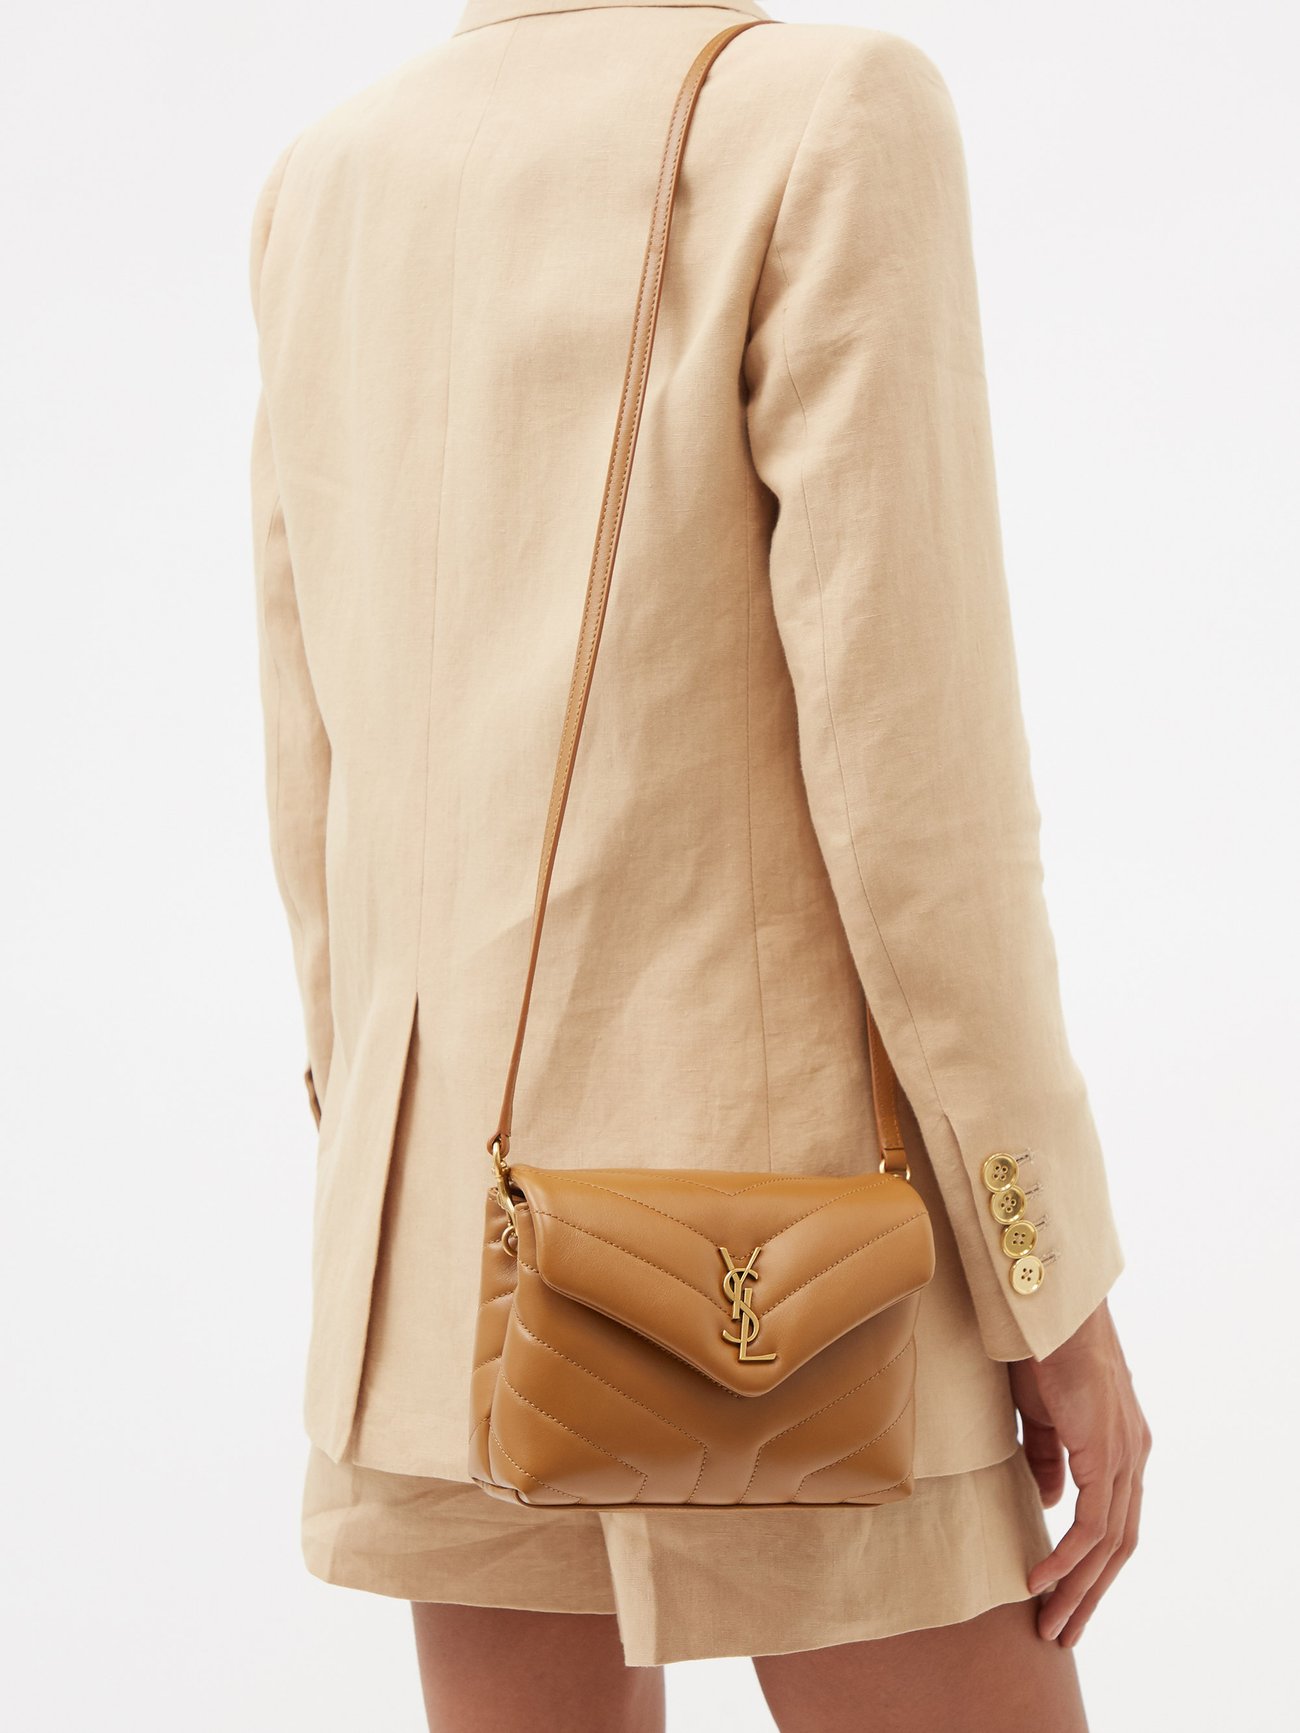 Loulou Toy Leather Shoulder Bag in Brown - Saint Laurent